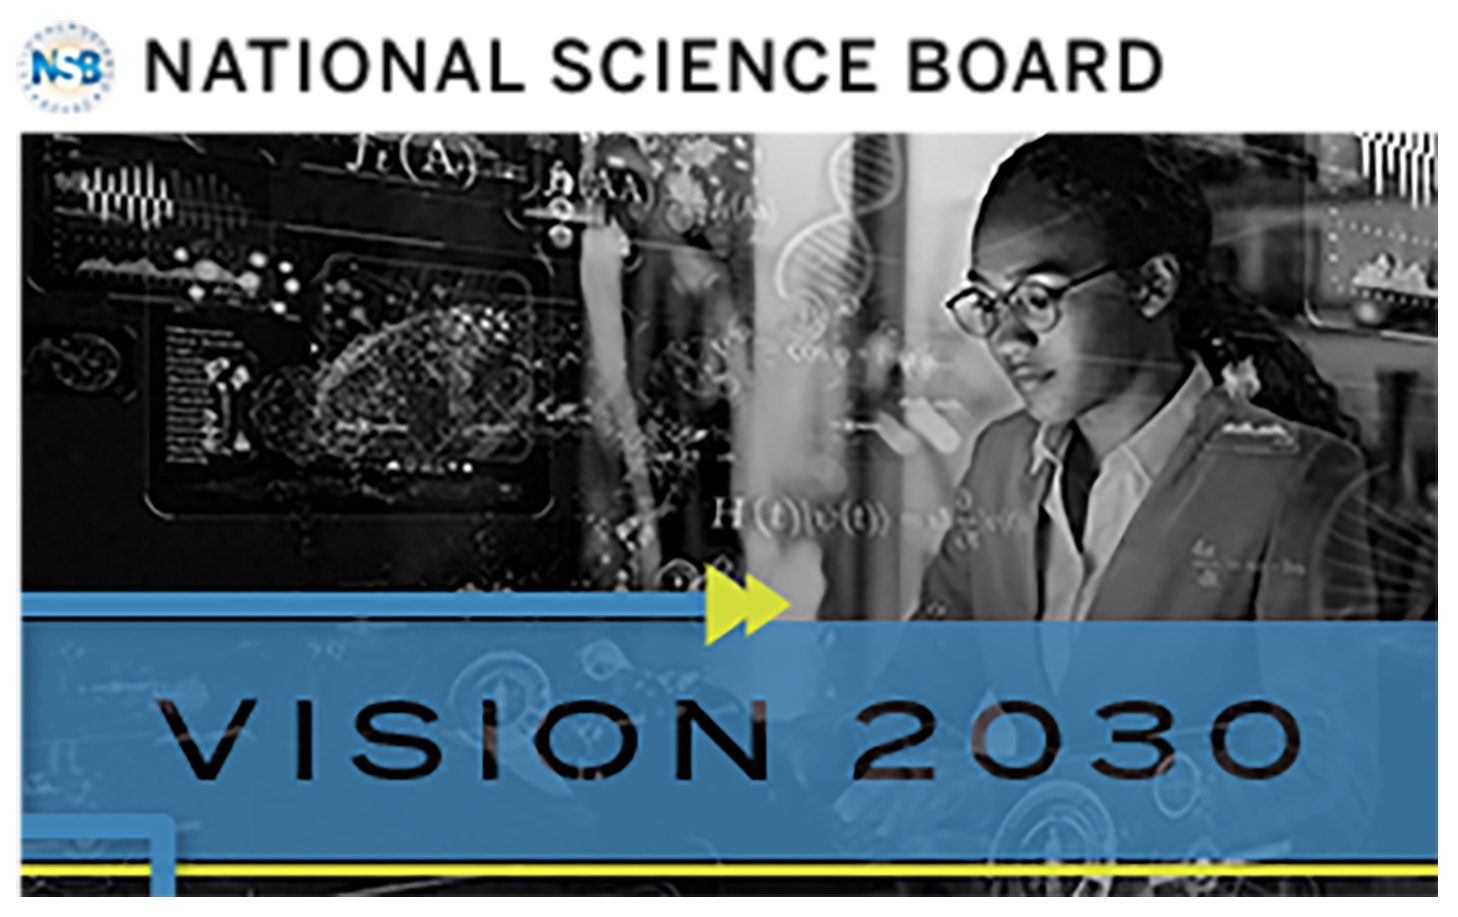 NSB Vision 2030 Cover